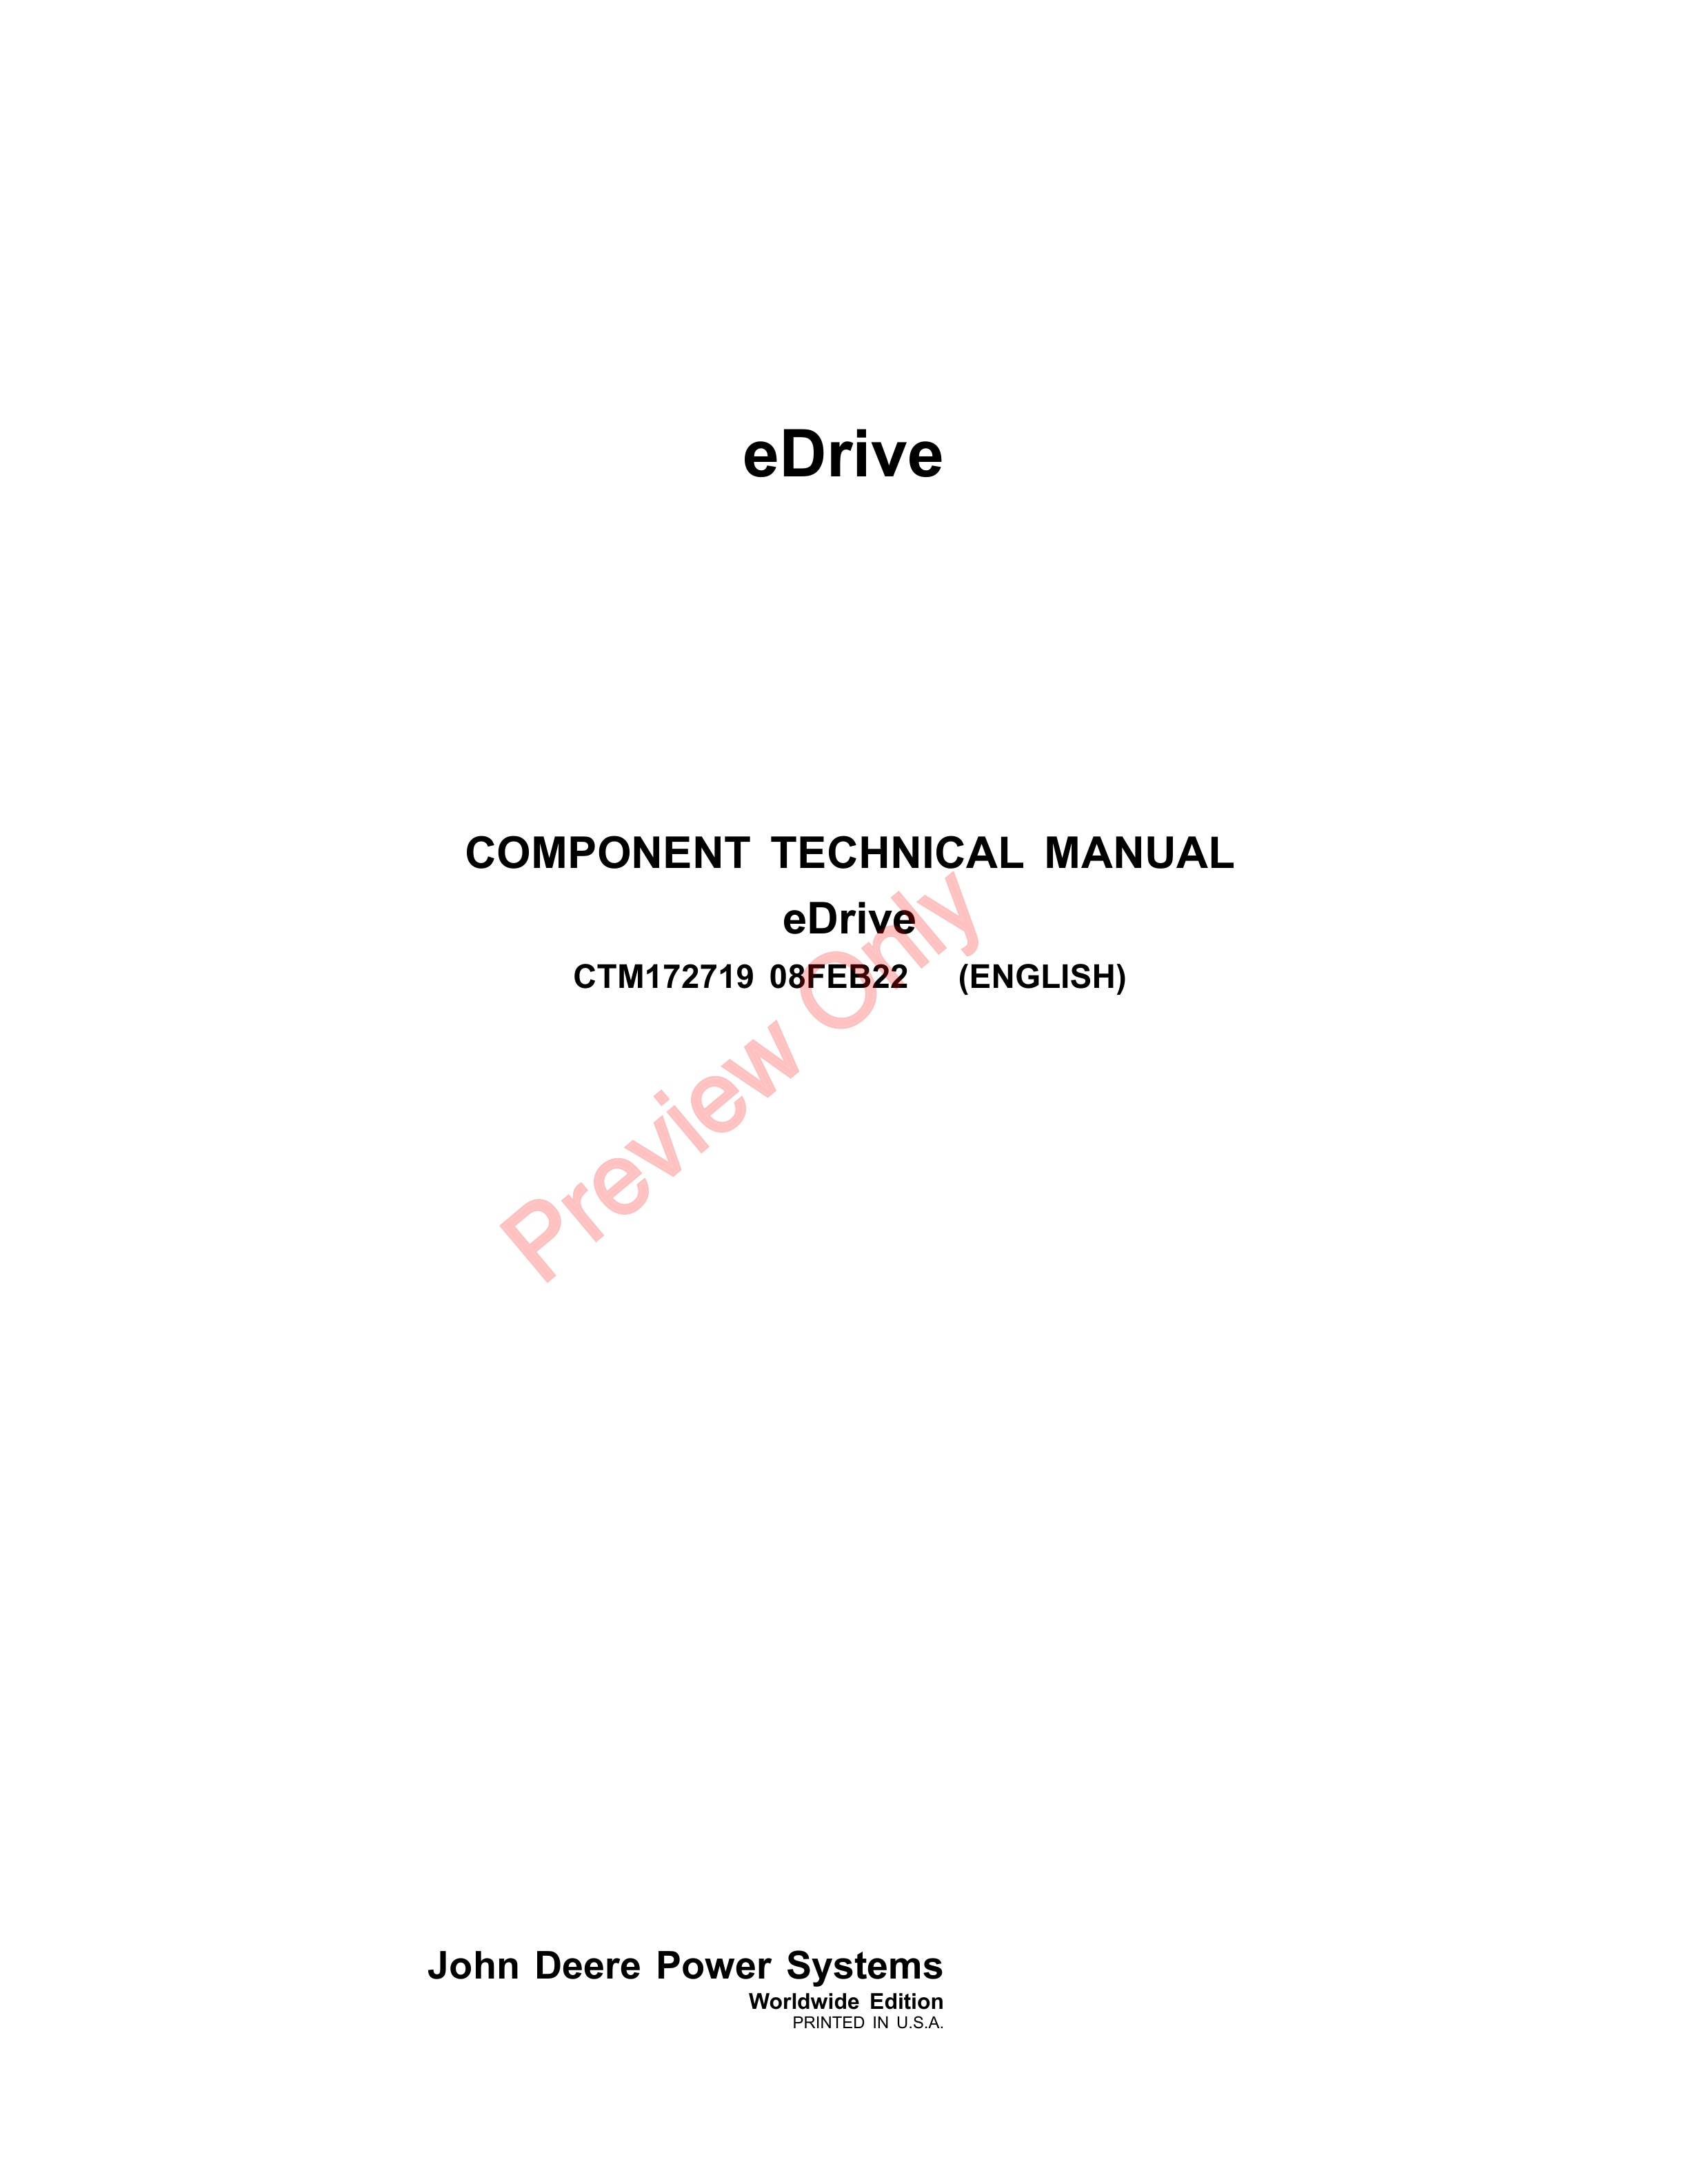 John Deere eDrive Component Technical Manual CTM172719 08FEB22 1